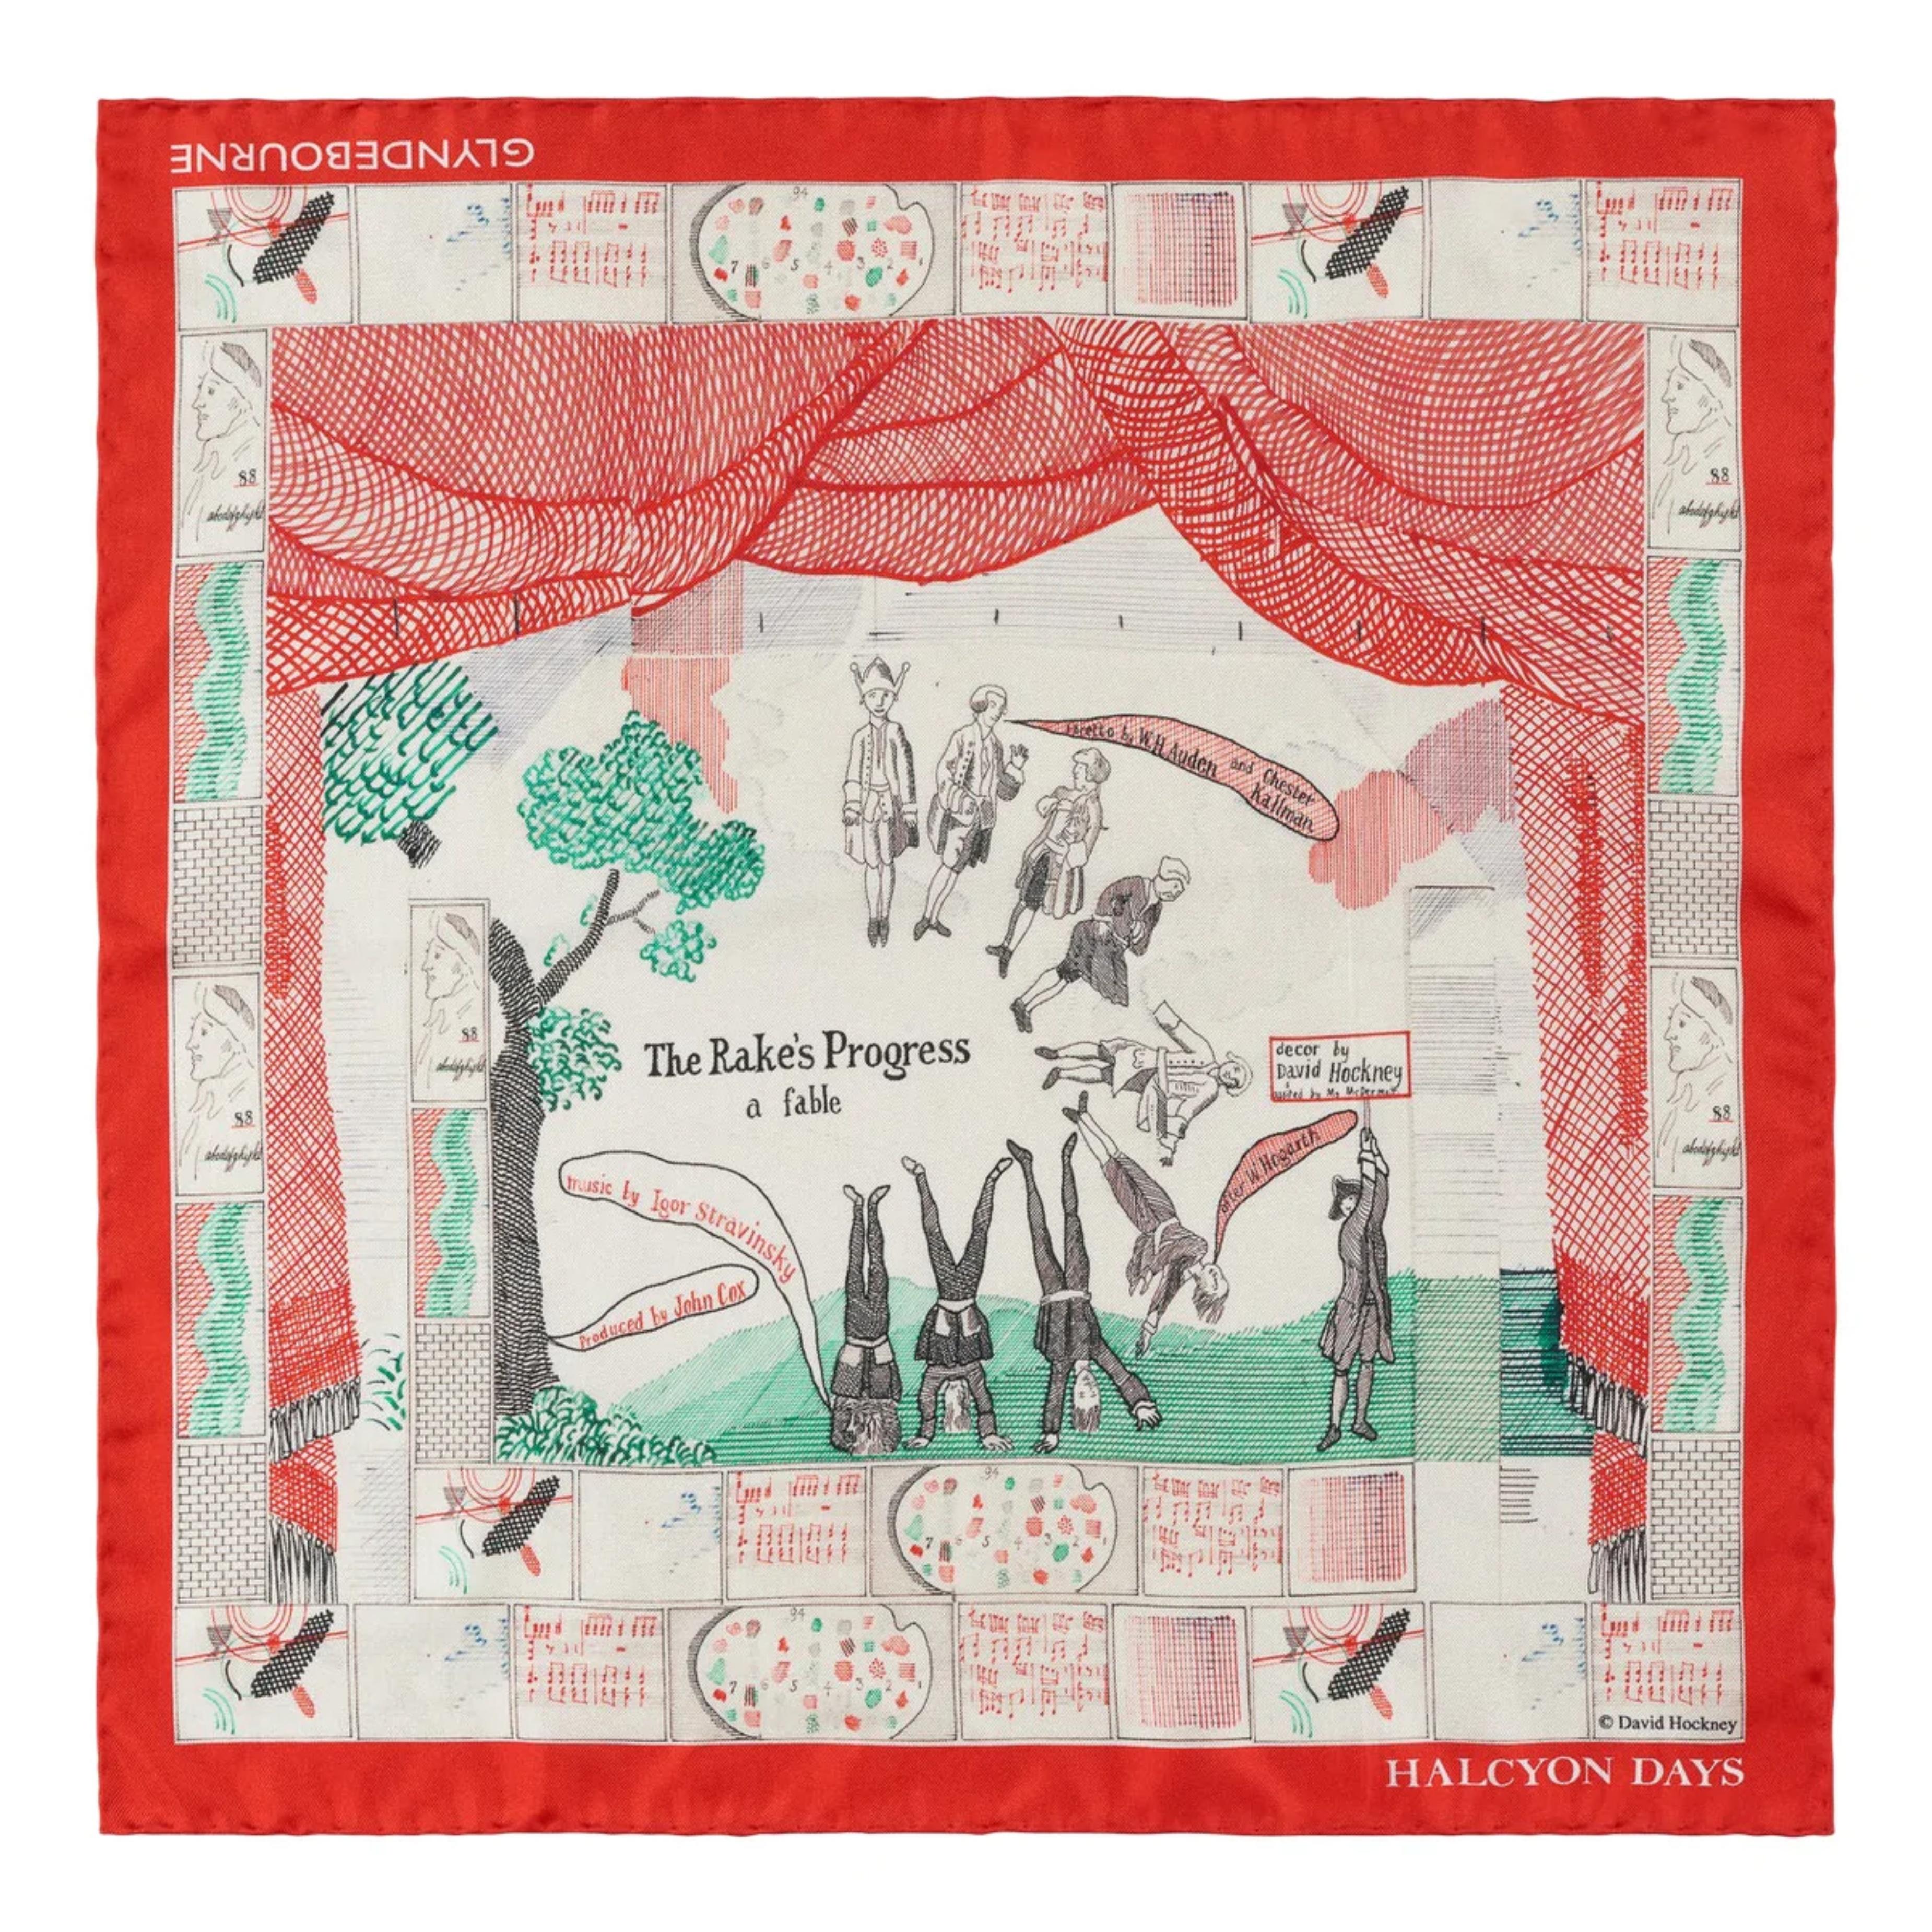 The Rake's Progress 100% Silk Pocket Scarf in bespoke gift box - Mixed Media Art by David Hockney